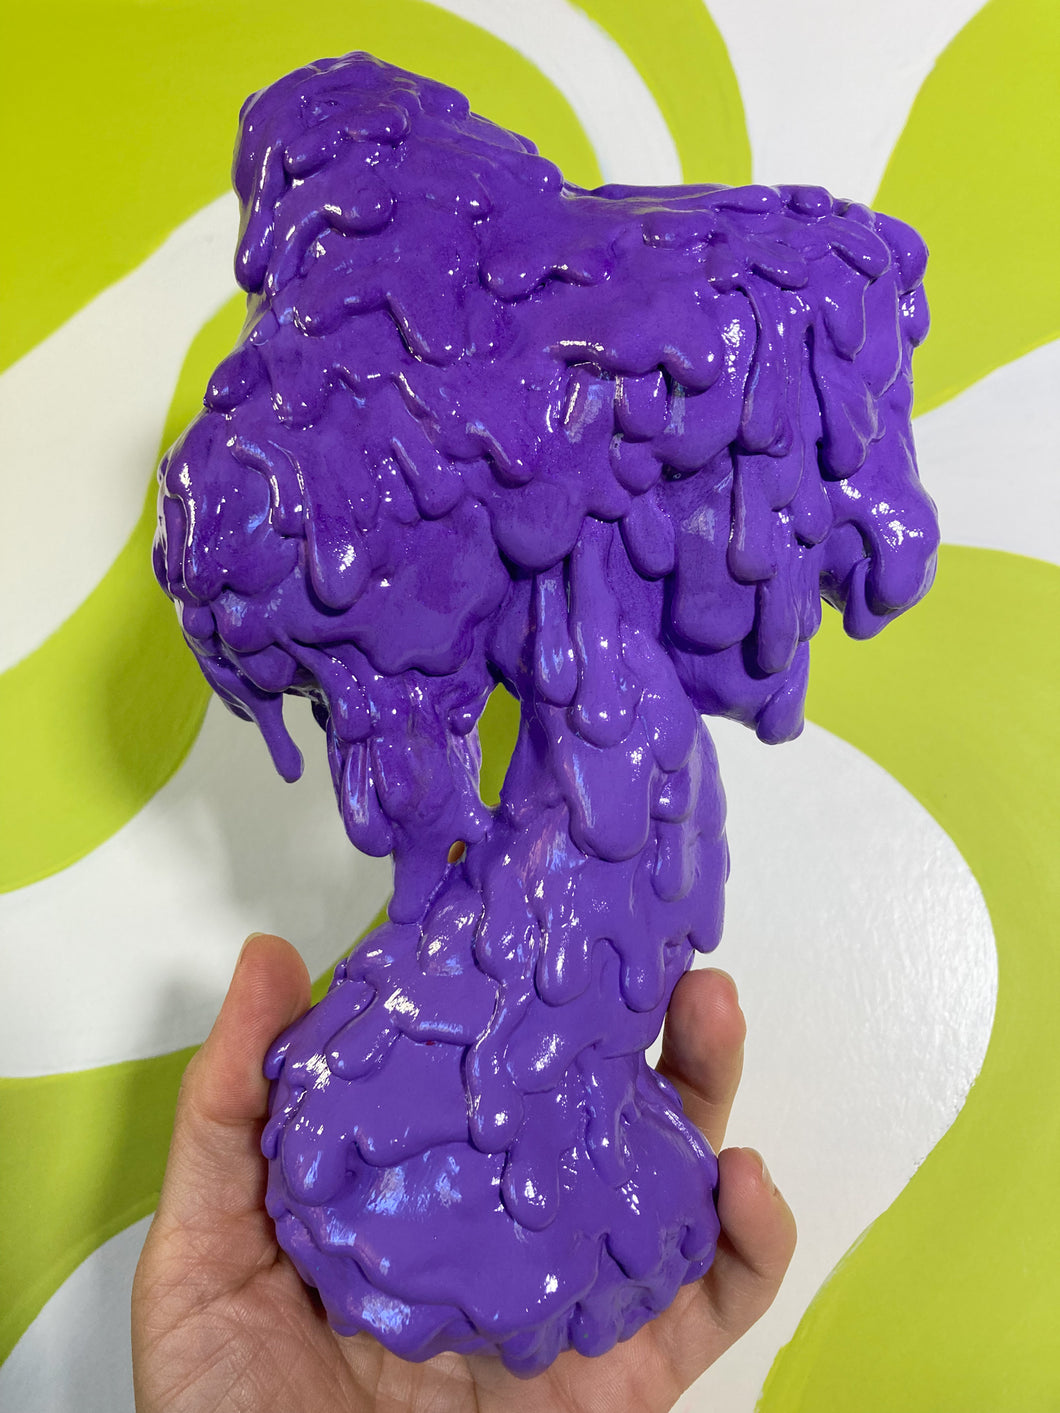 Melting mushroom sculpture (Lavender)